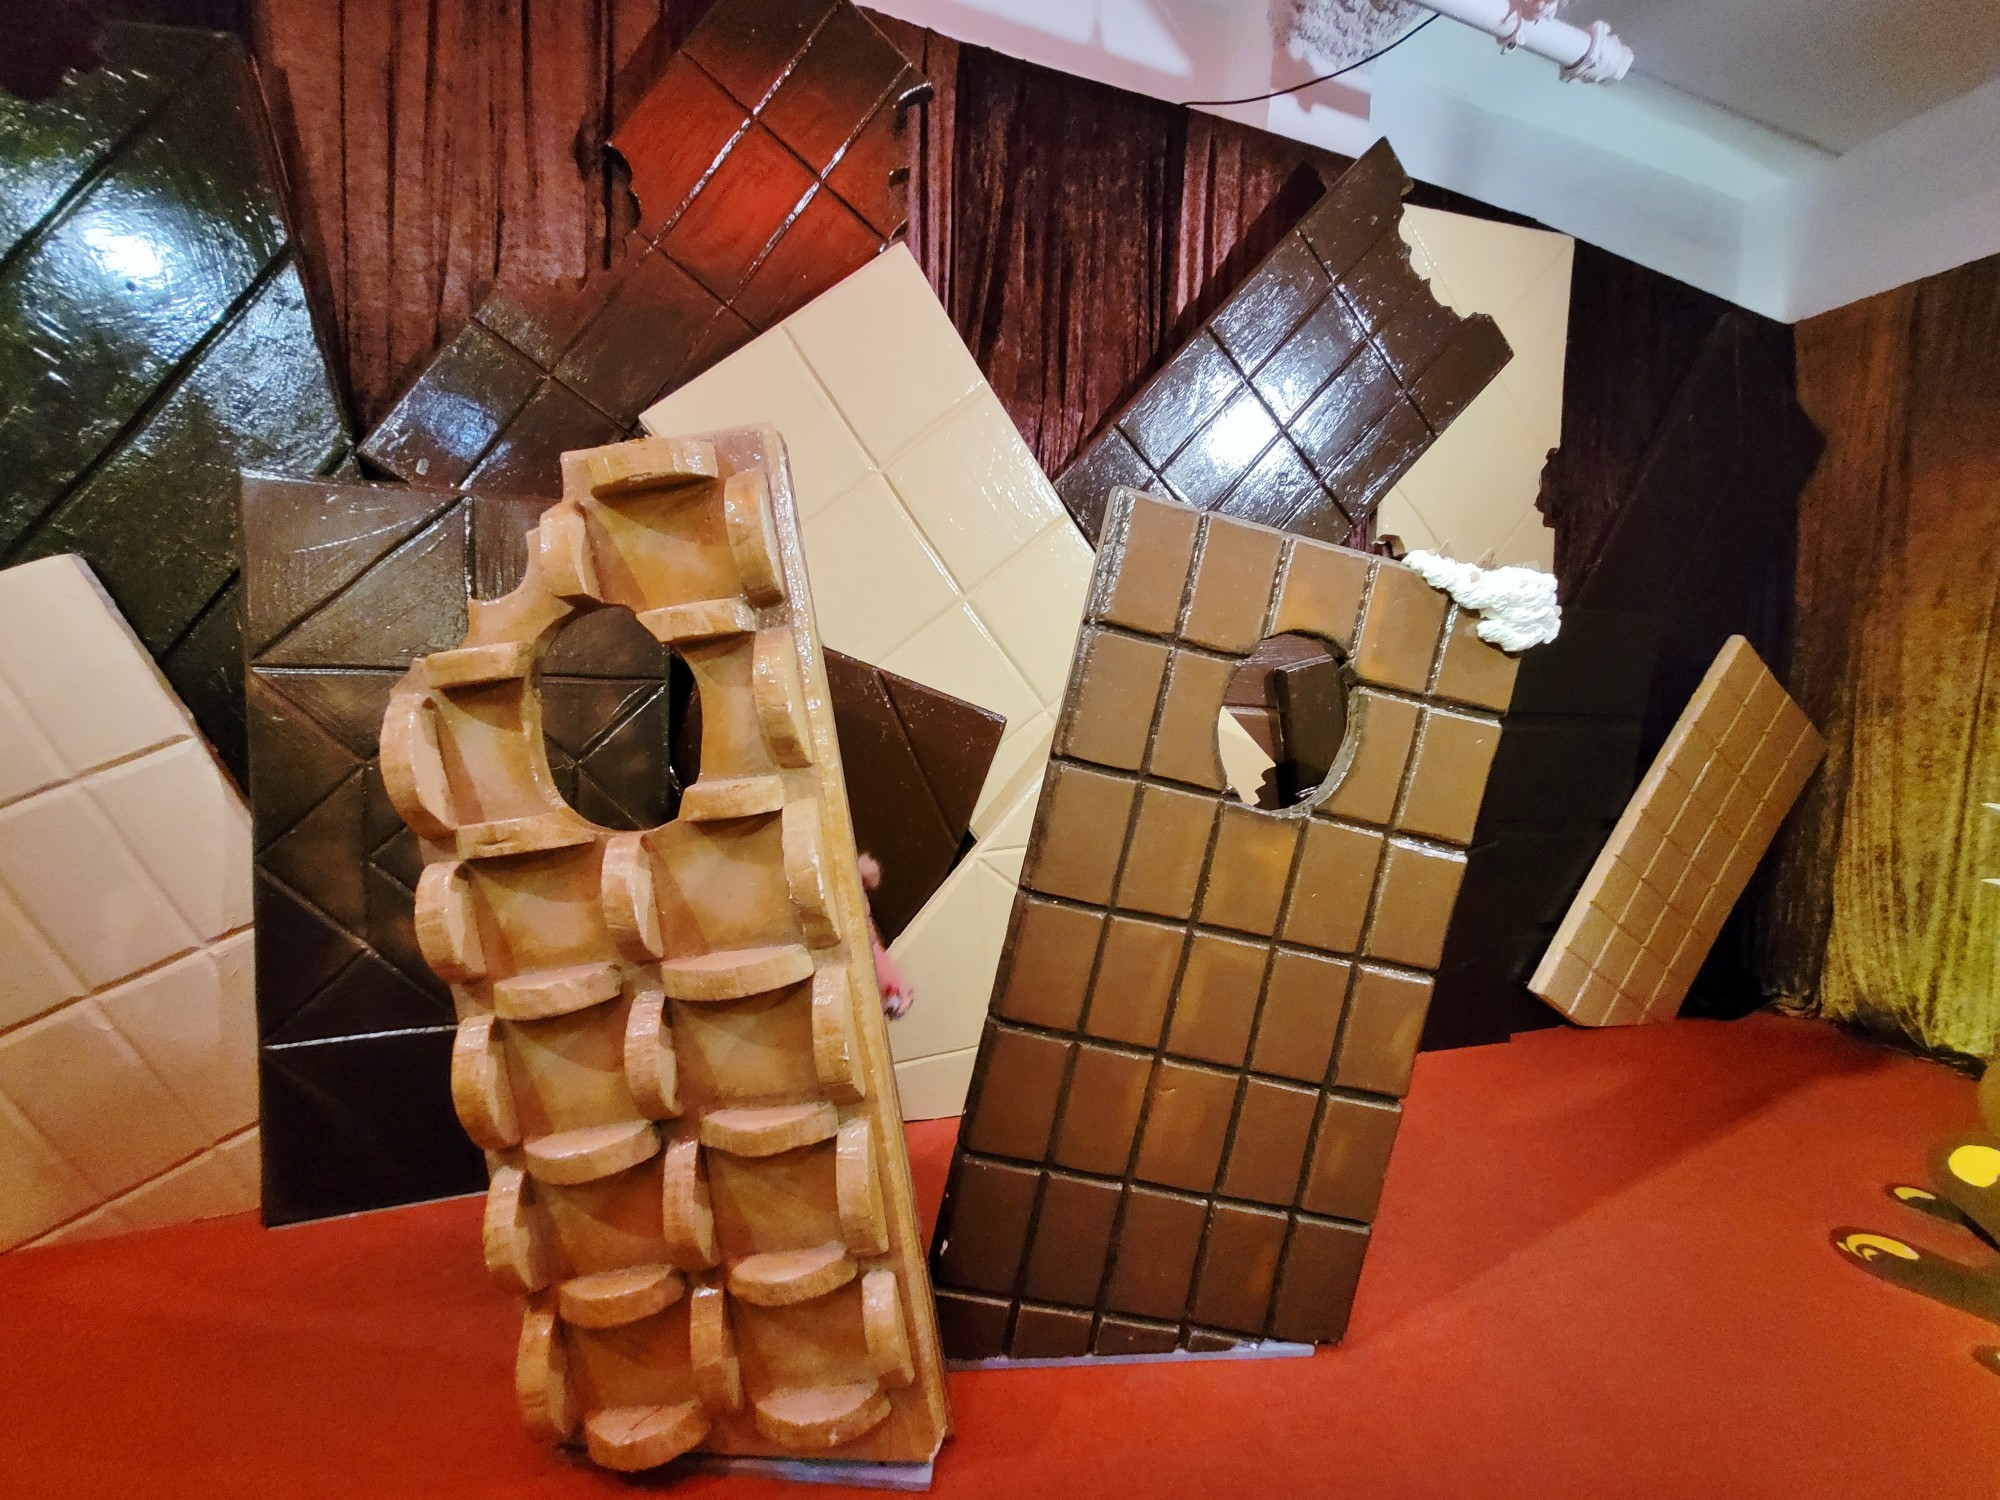 Foto: La fábrica de chocolate - Barcelona (Cataluña), España